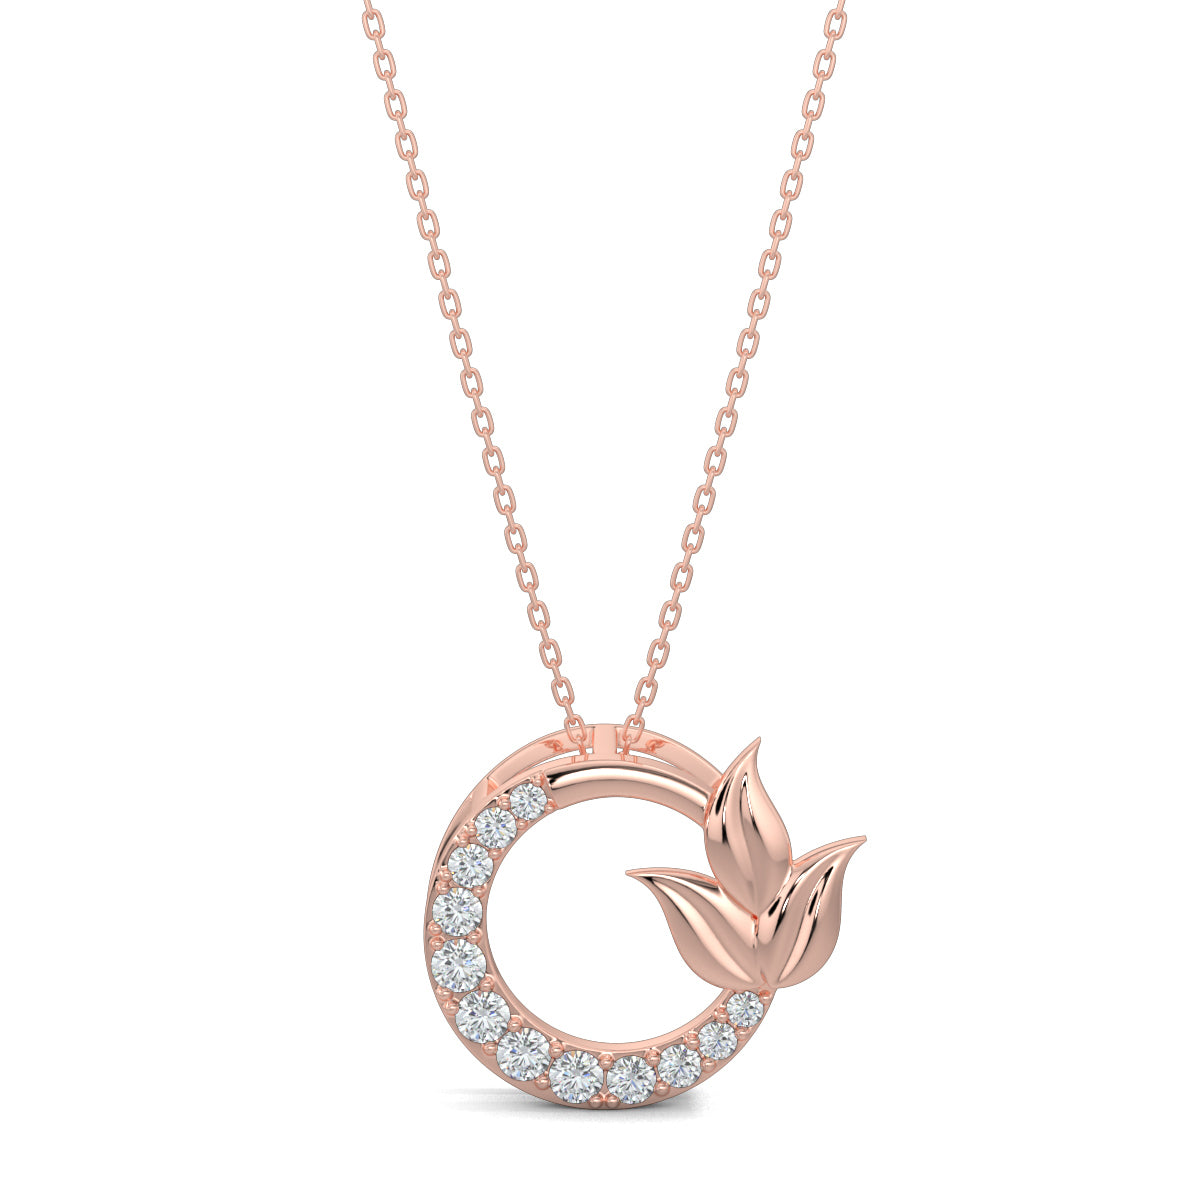 Rose Gold, diamond pendant, natural diamonds, lab-grown diamonds, chic petal pendant, circular pendant, elegant jewelry, modern pendant, women's accessory, fashion pendant